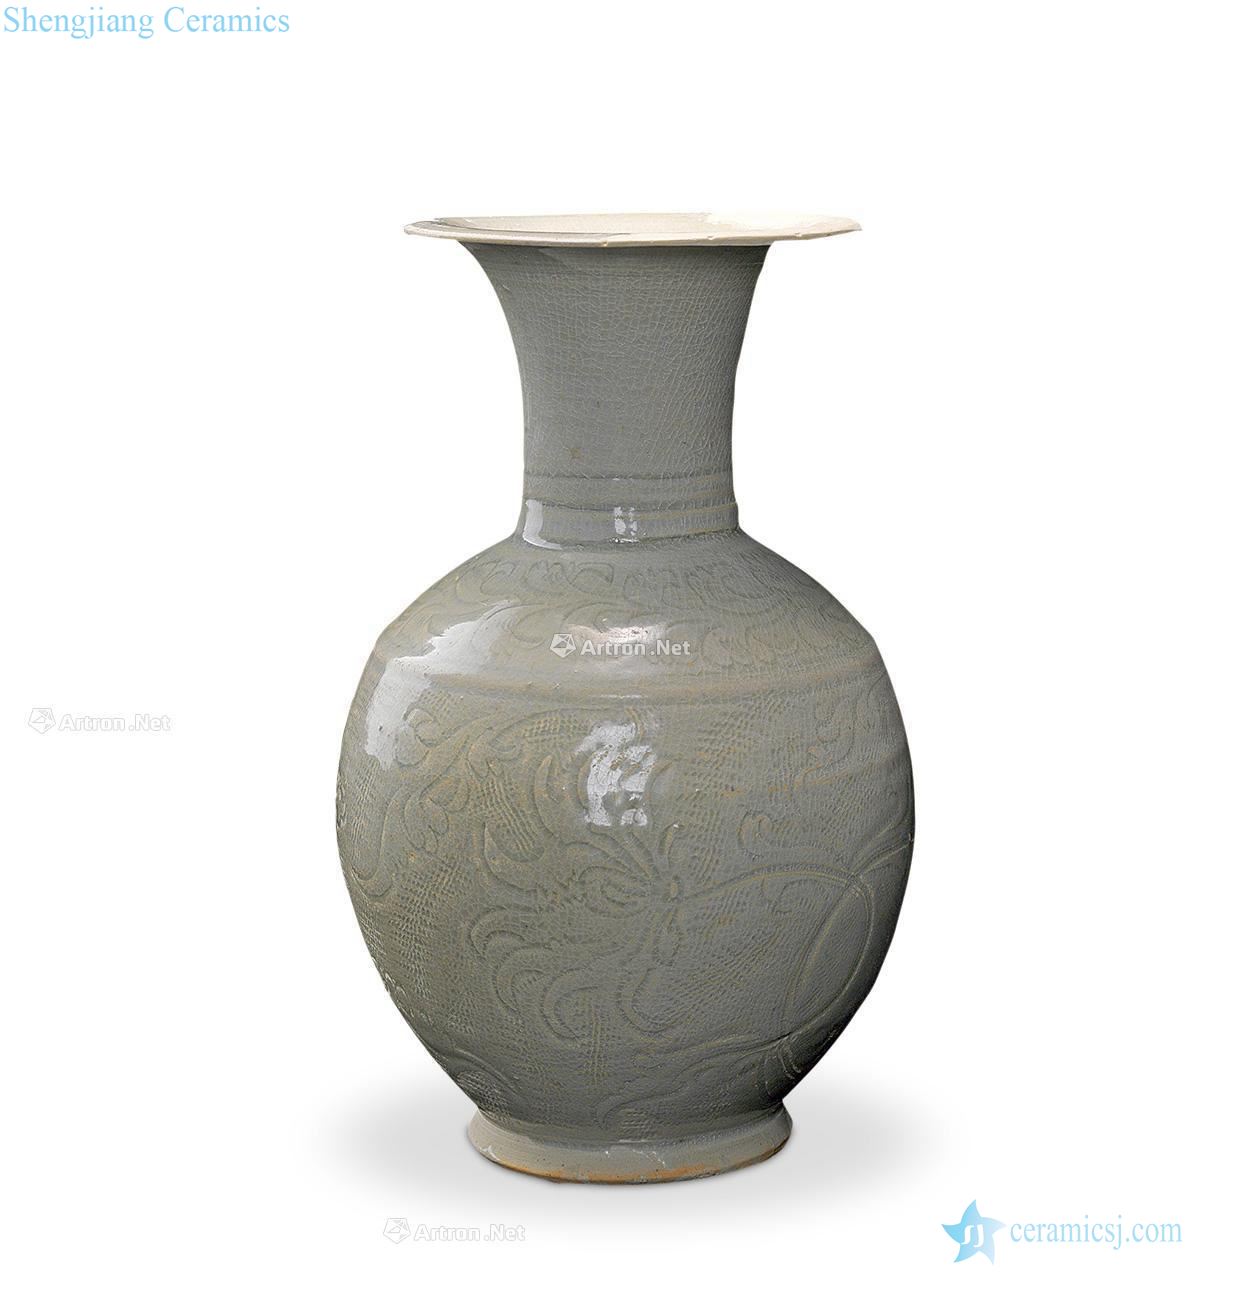 Ming vase or earlier shadow blue